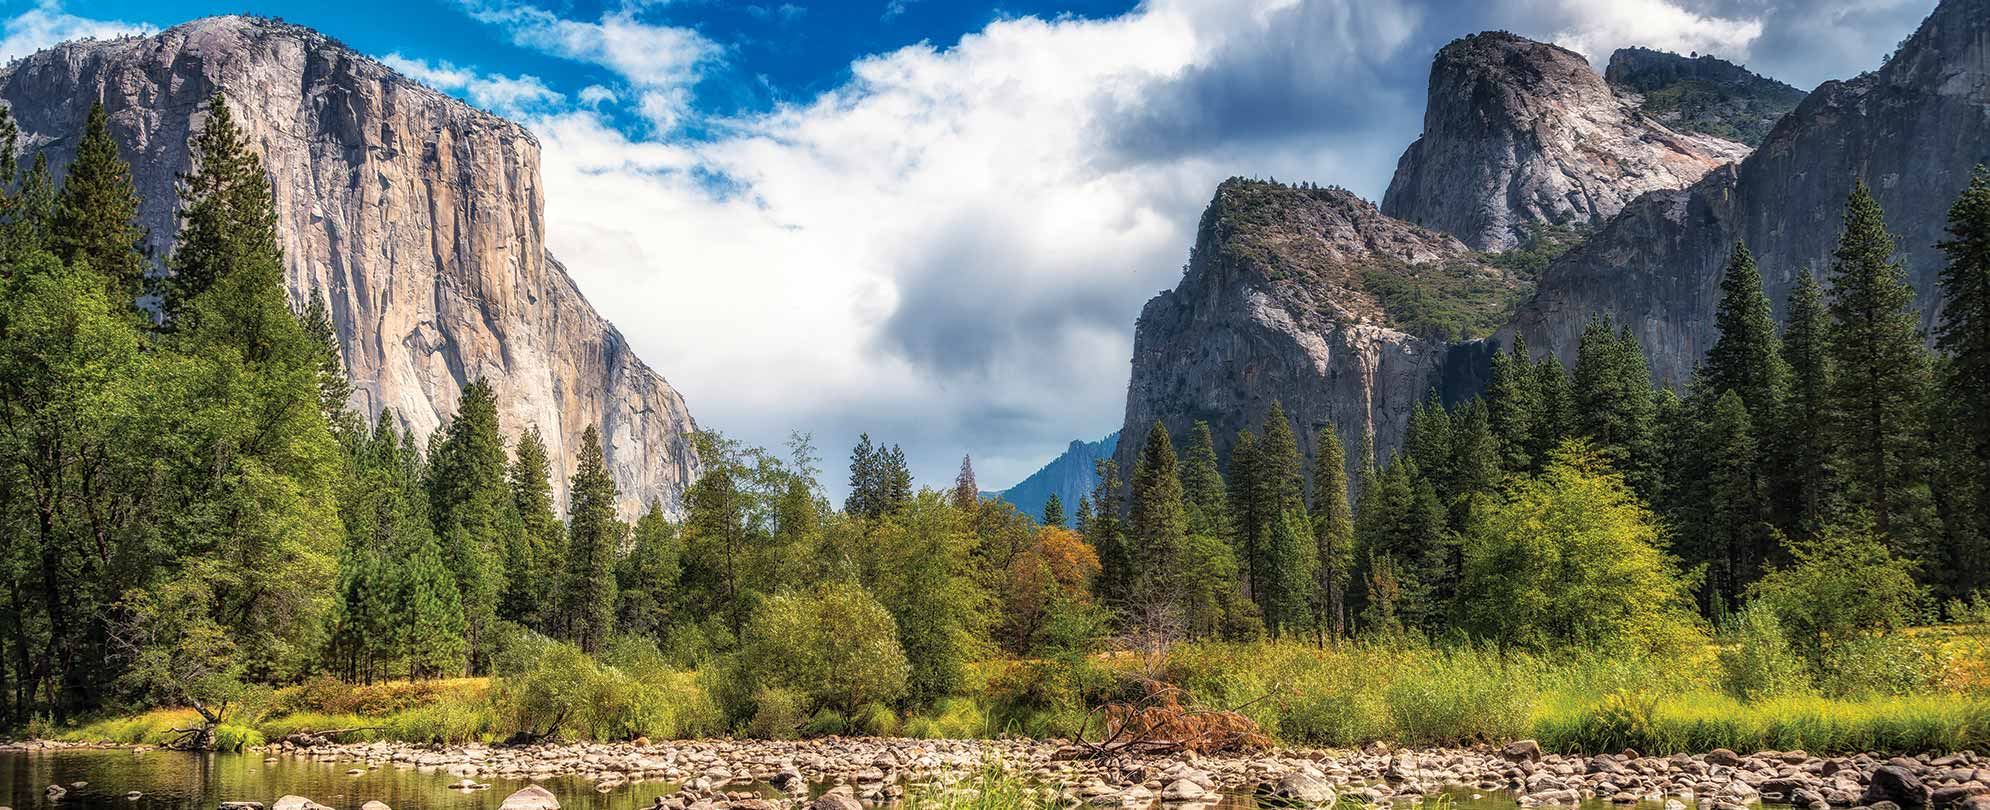 Large rock mountains at Yosemite National Park in California.